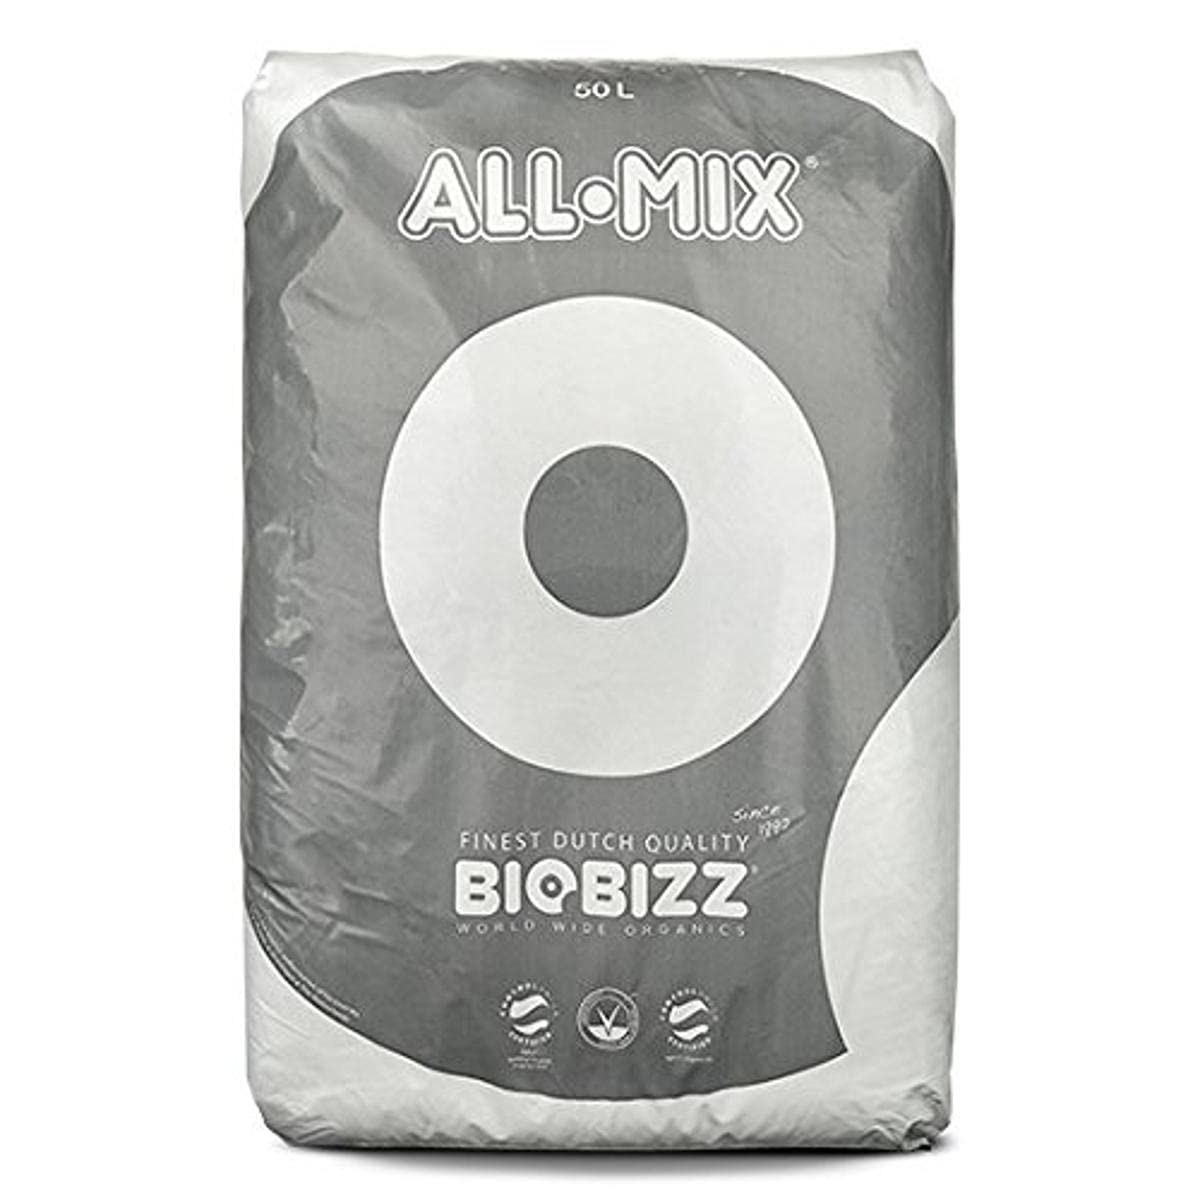 Pamant BioBizz All-Mix, cantitate 50 liter